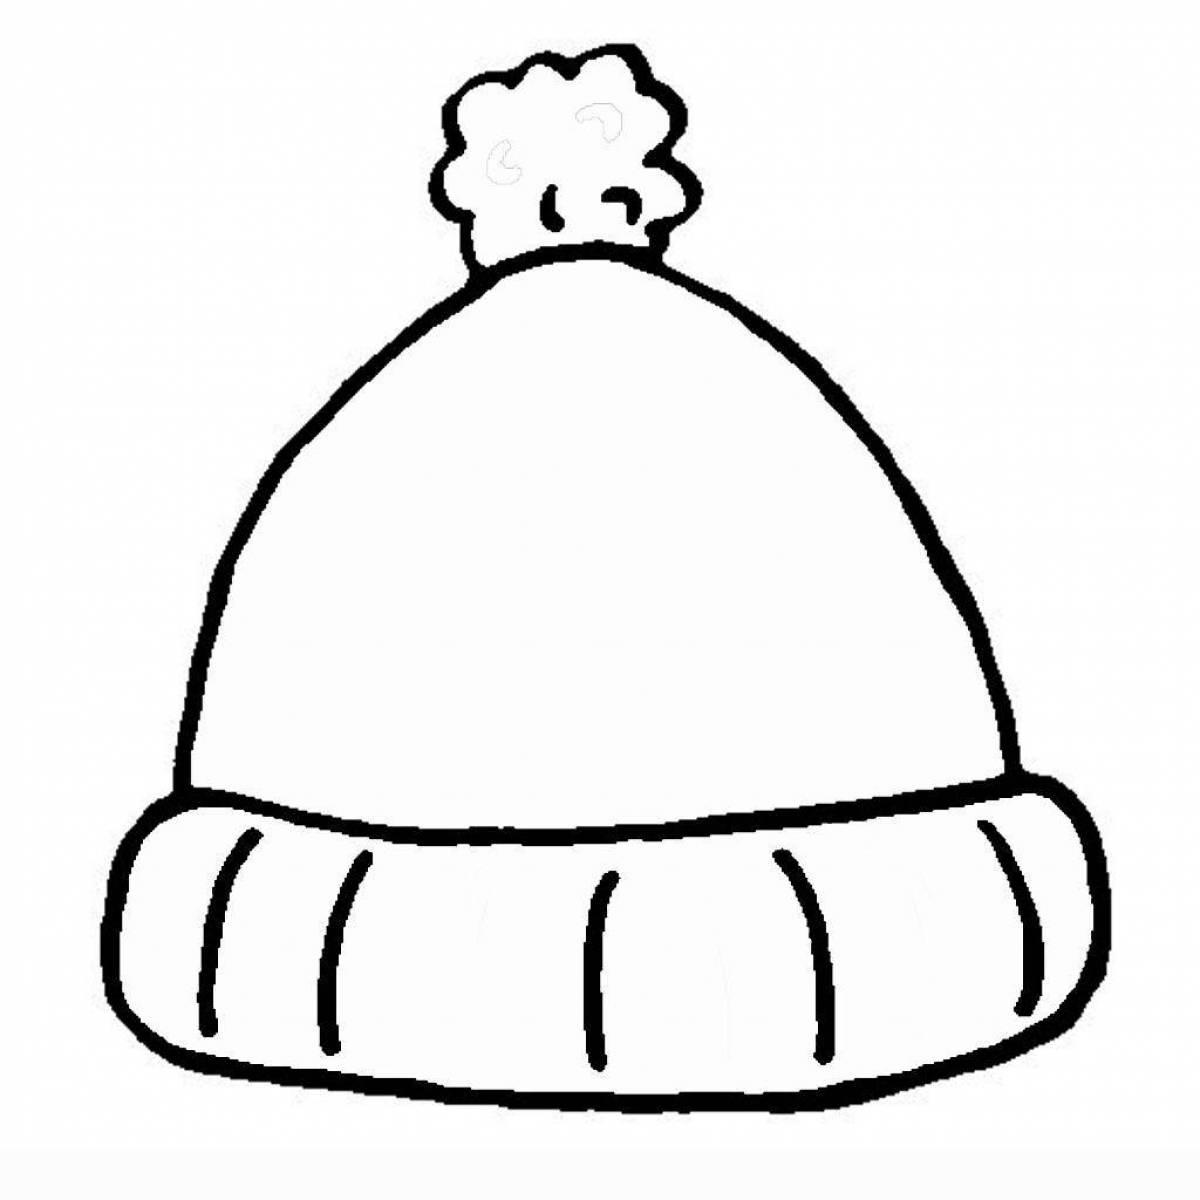 Children's cute pom-pom hat